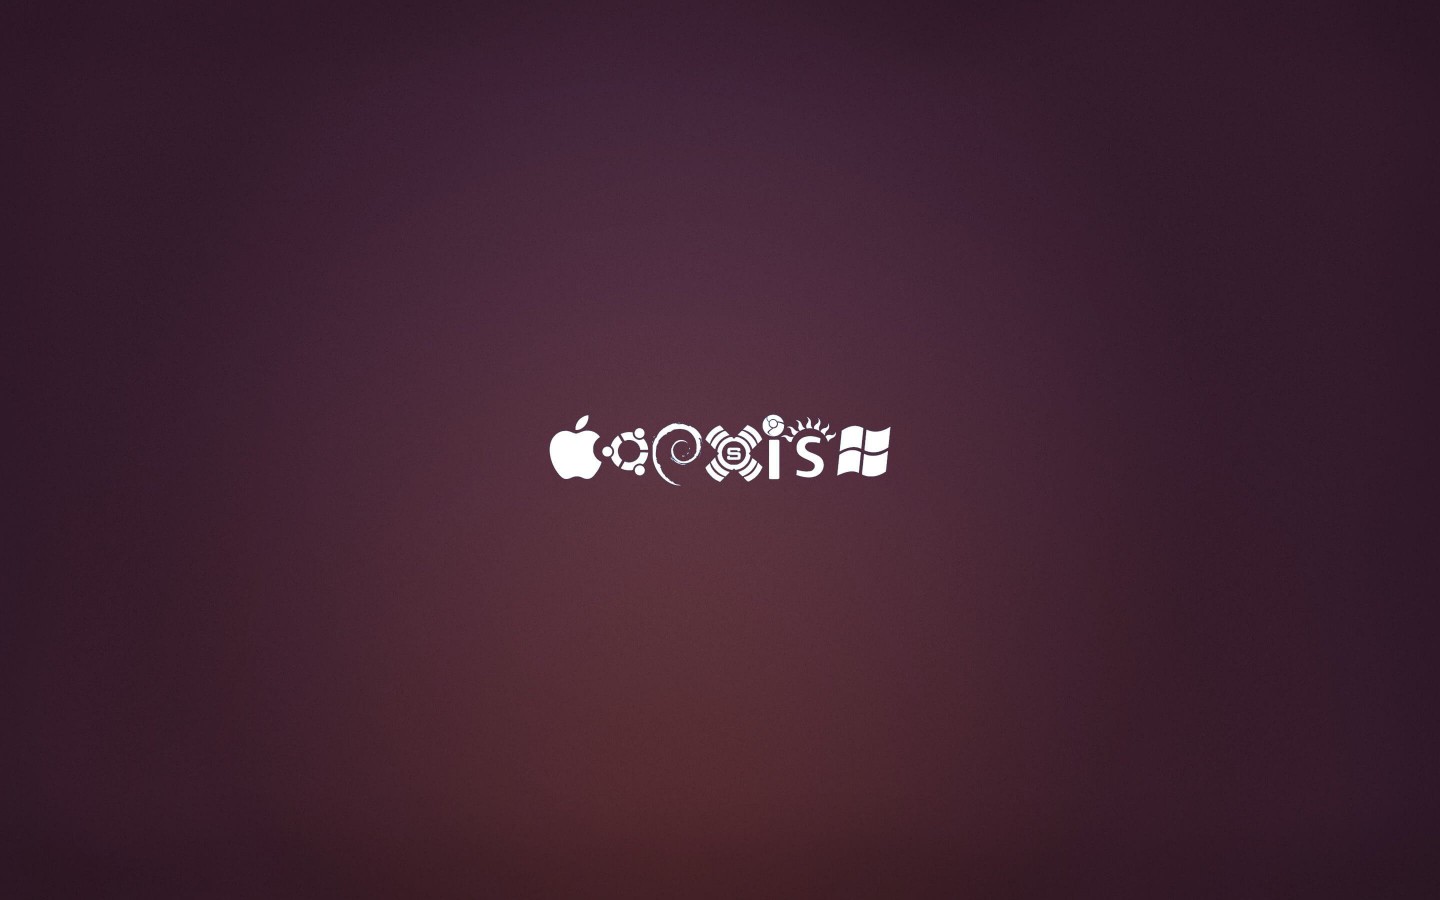 OS Coexist Wallpaper for Desktop 1440x900